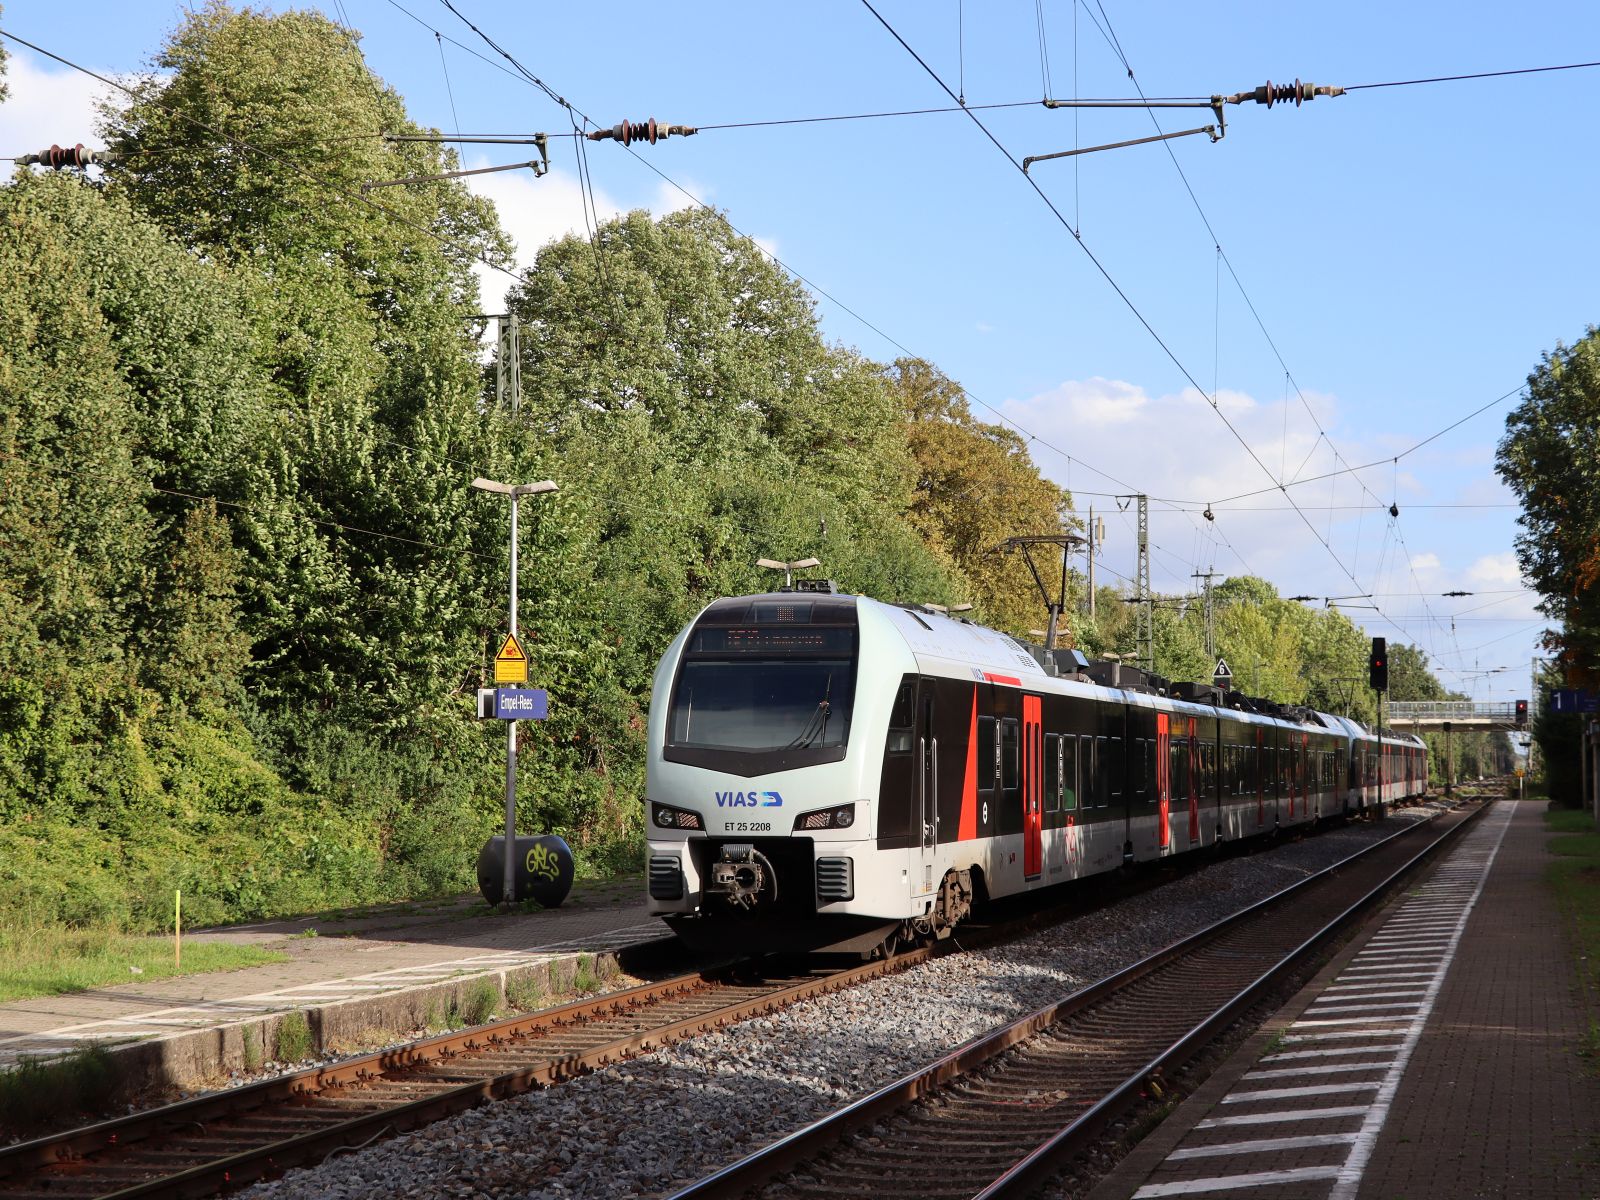 Vias Triebzug ET 25 2208 und 25 2203 Gleis 2 Bahnhof Empel-Rees 16-09-2022.

Vias treinstel ET 25 2208 en 25 2203 spoor 2 station Empel-Rees 16-09-2022.